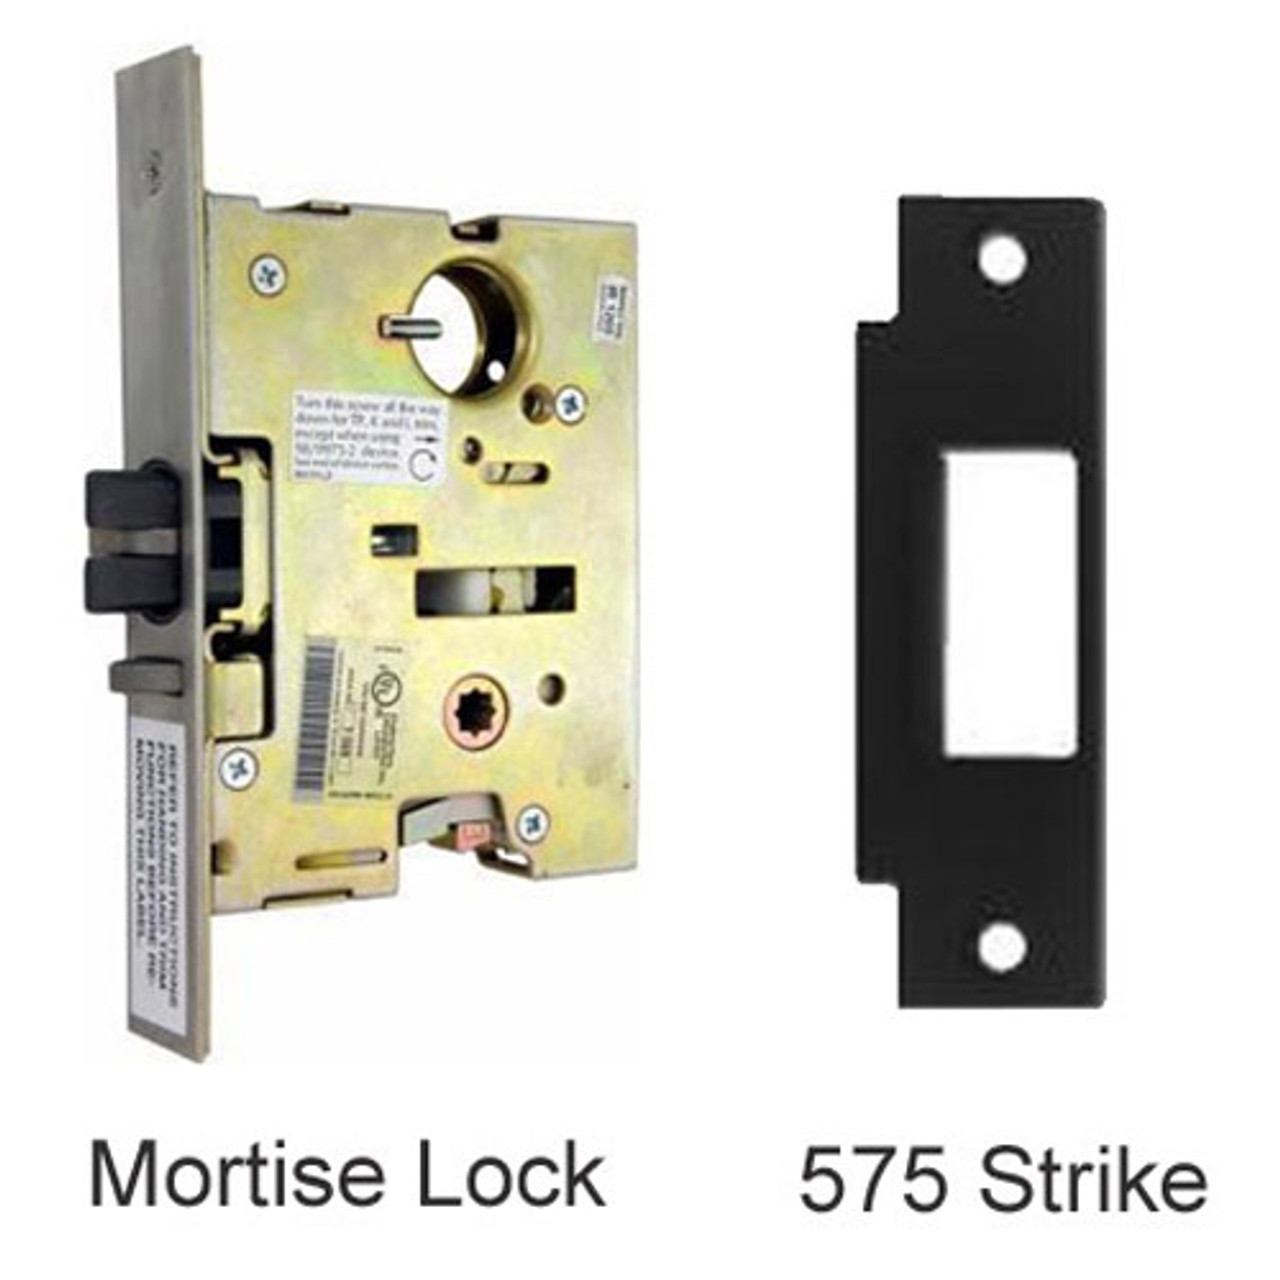 EL9875TP-US26-3 Von Duprin Mortise Lock and Strike